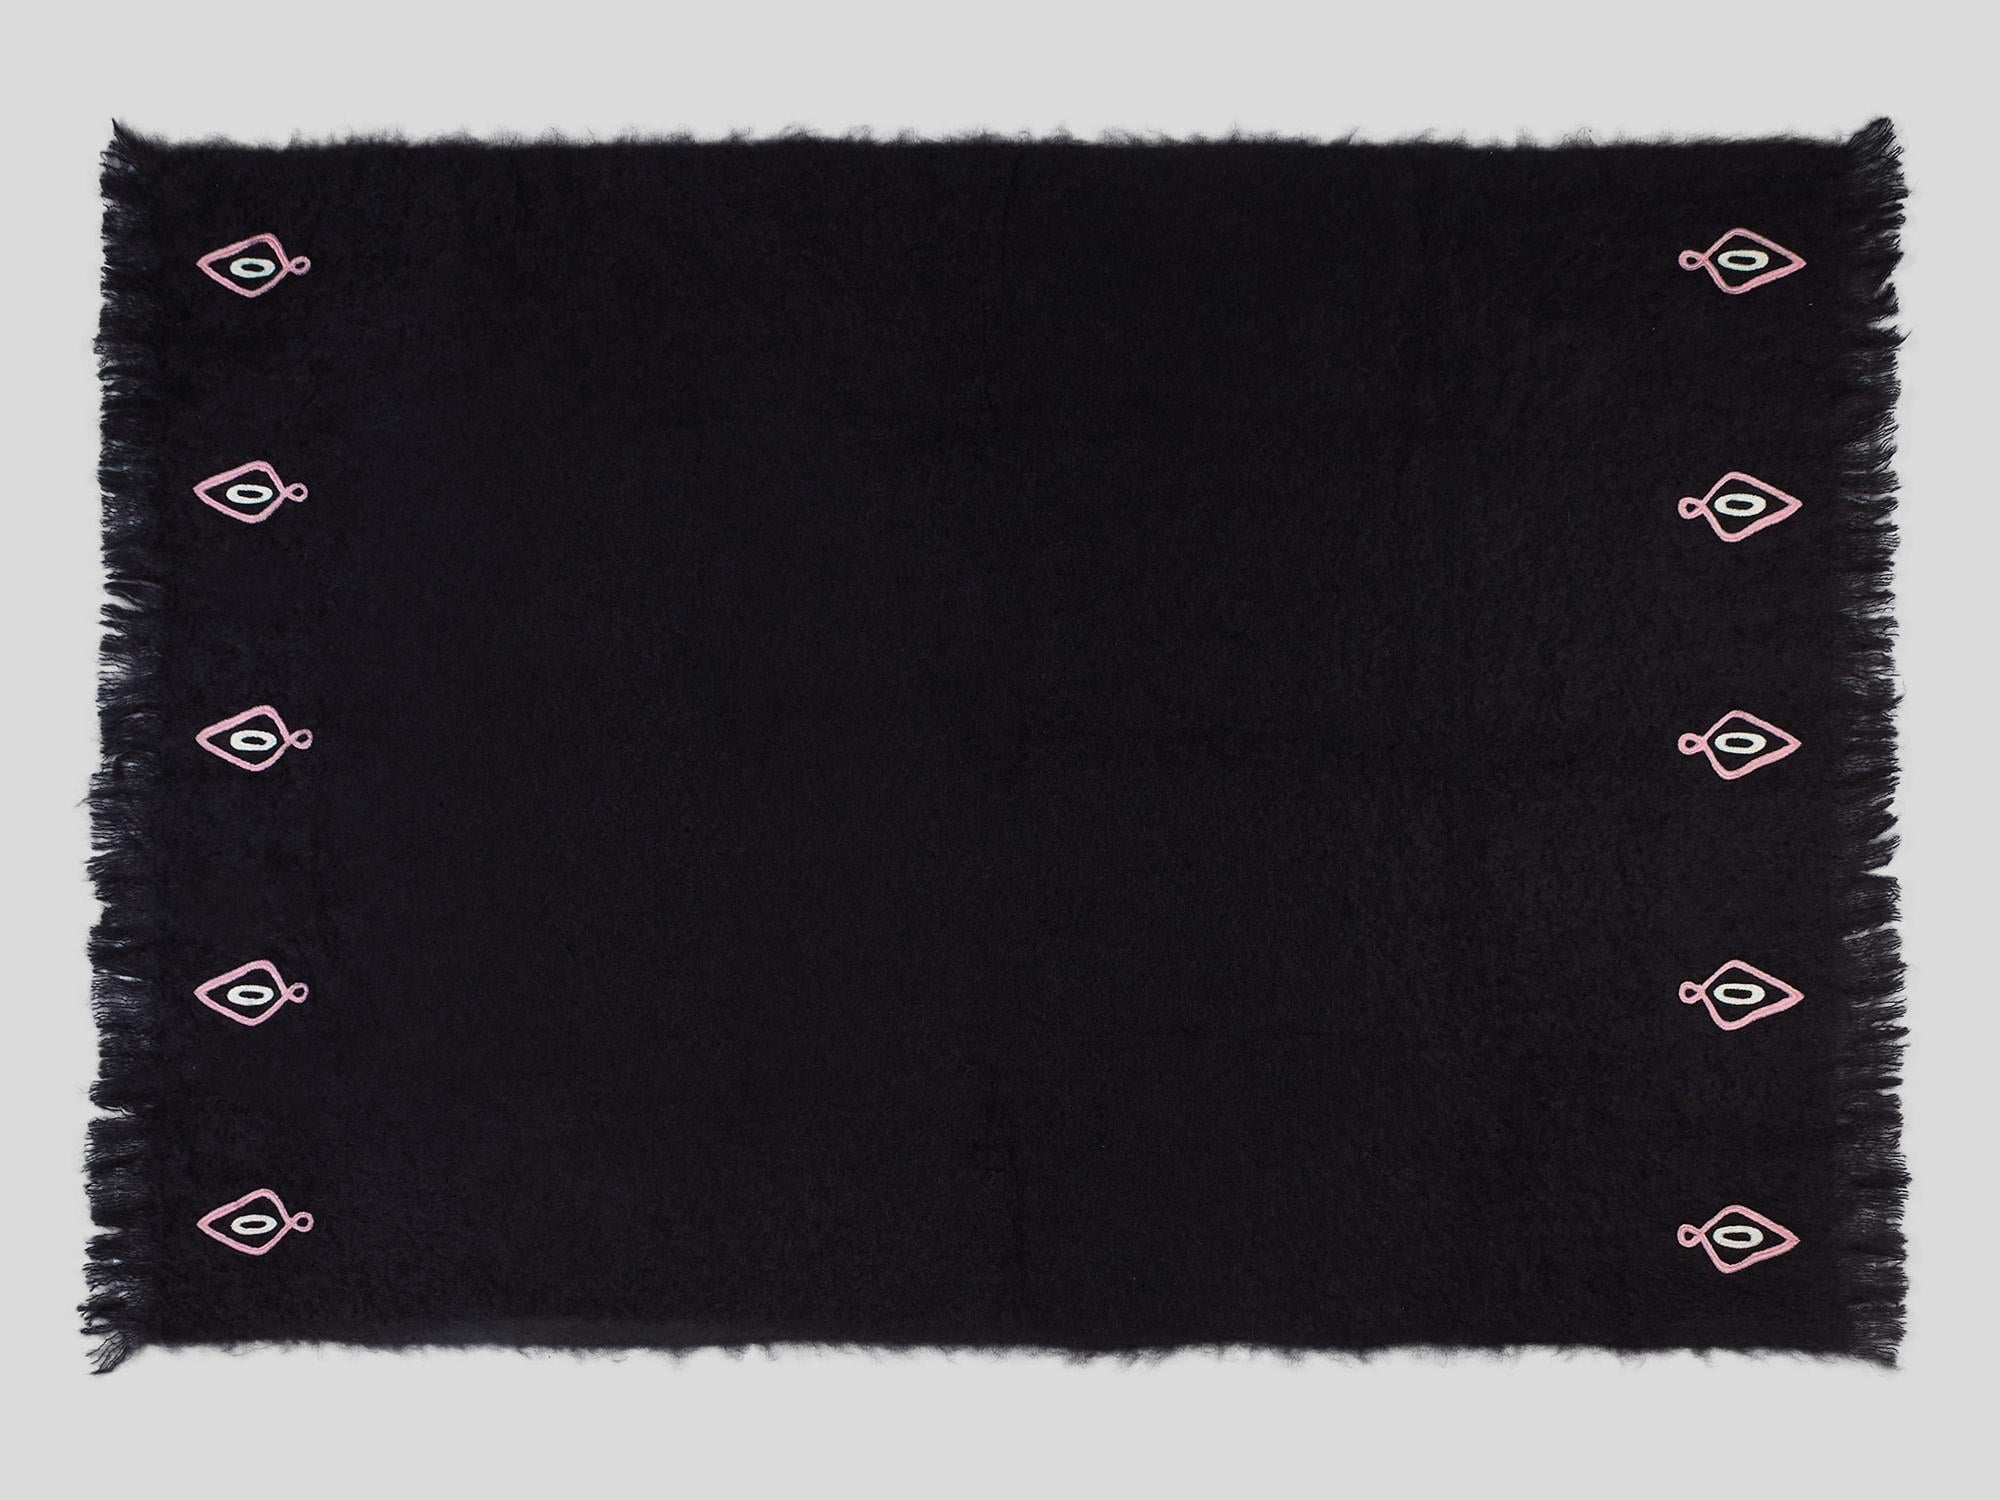 Needlework Omaka, Hand Embroidered Black Throw Blanket